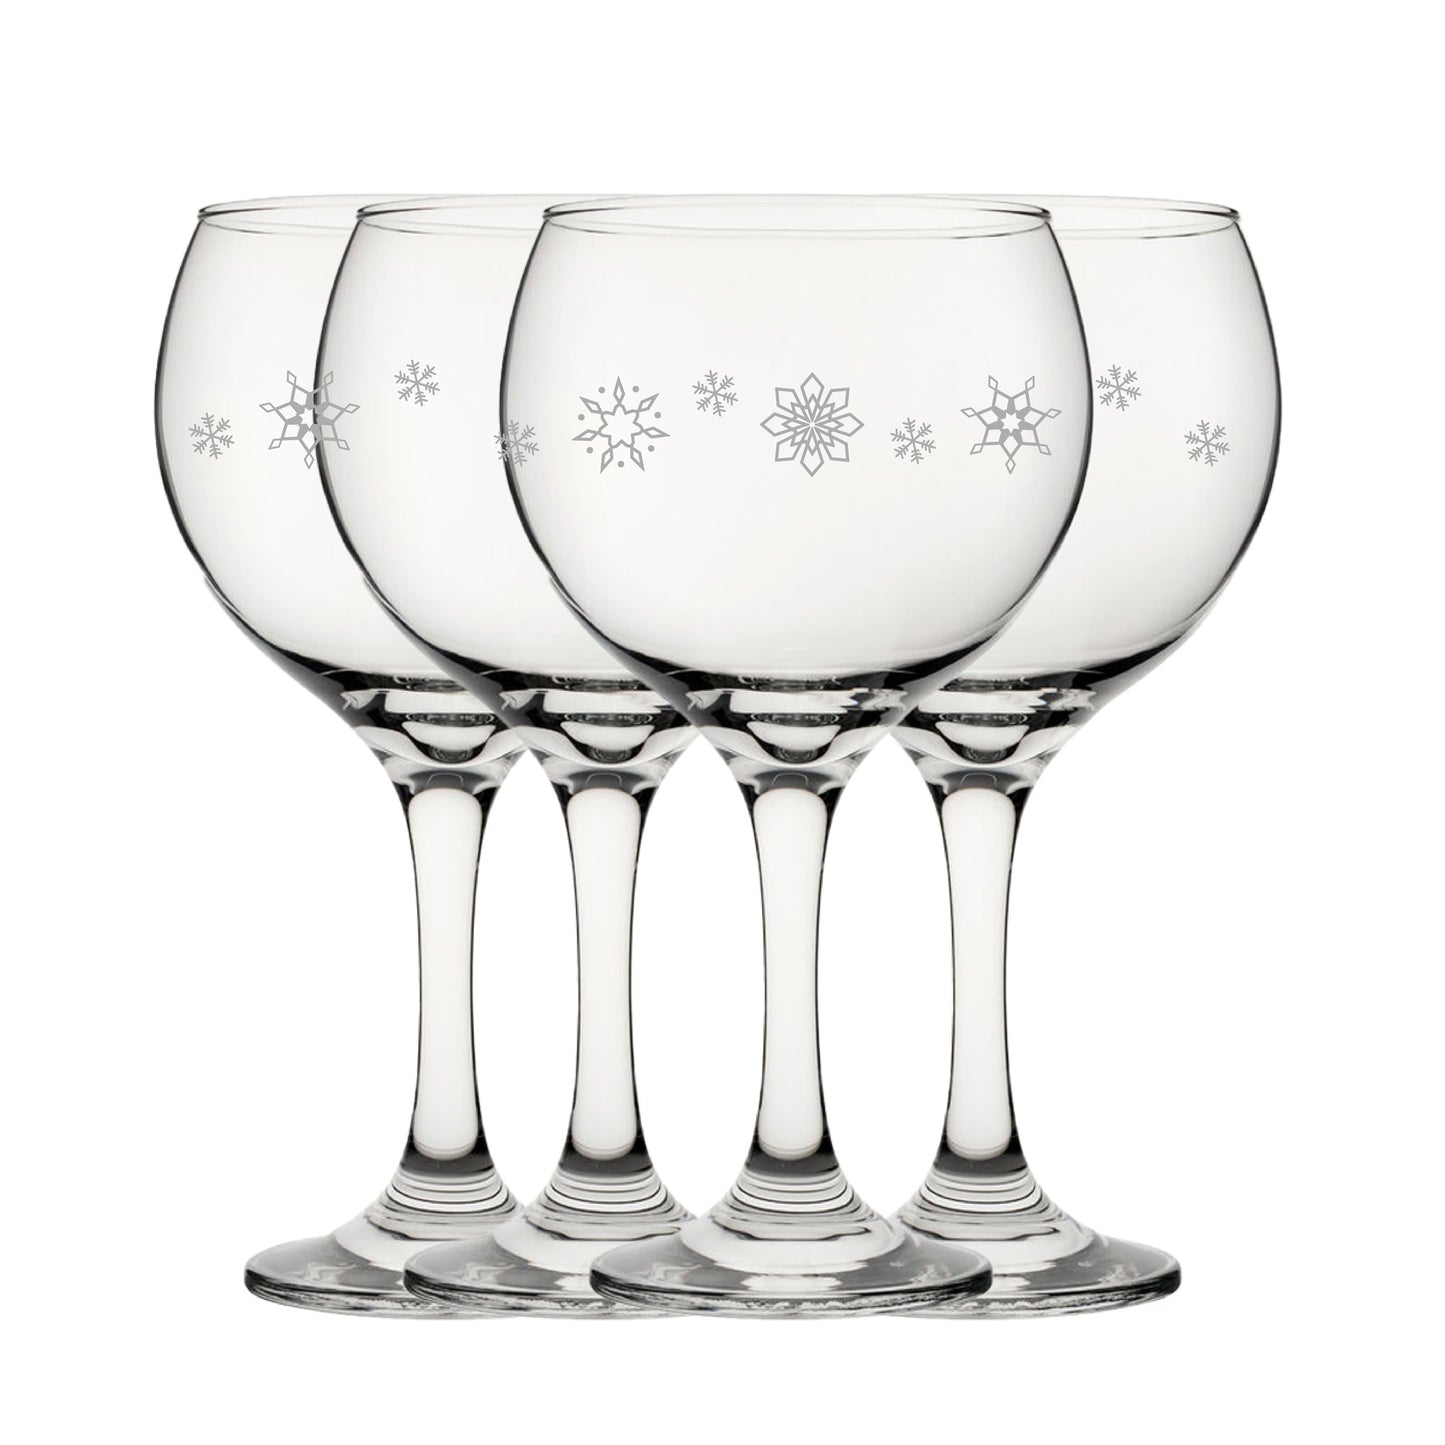 Engraved Snowflake Pattern Gin Balloon Set of 4 22.5oz Glasses Image 2